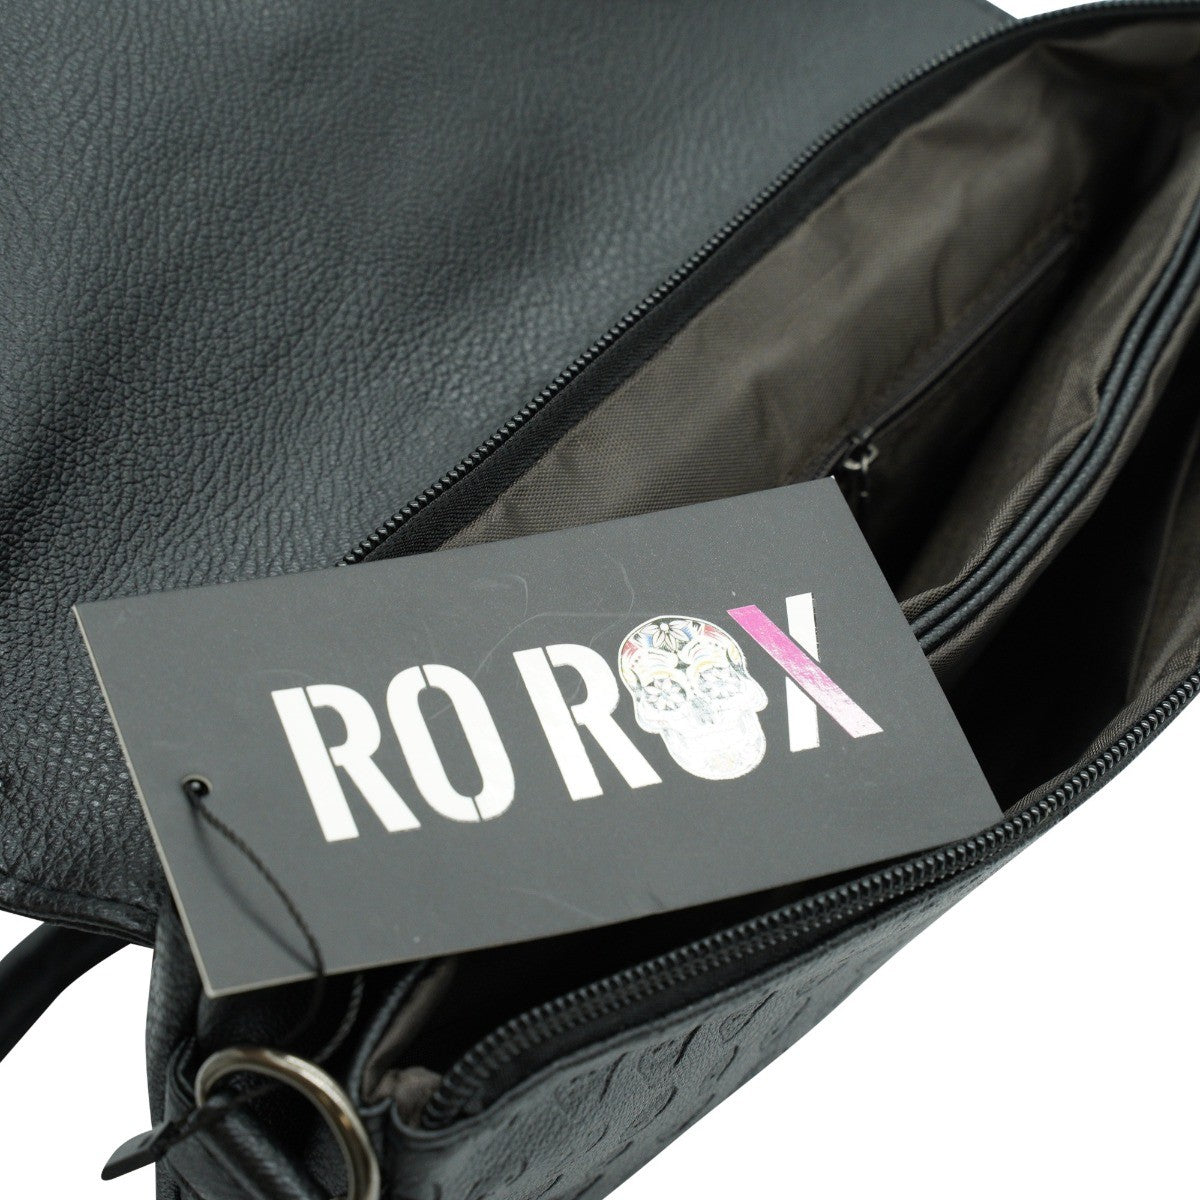 Ro Rox Studded Skull PU Crossbody Bag